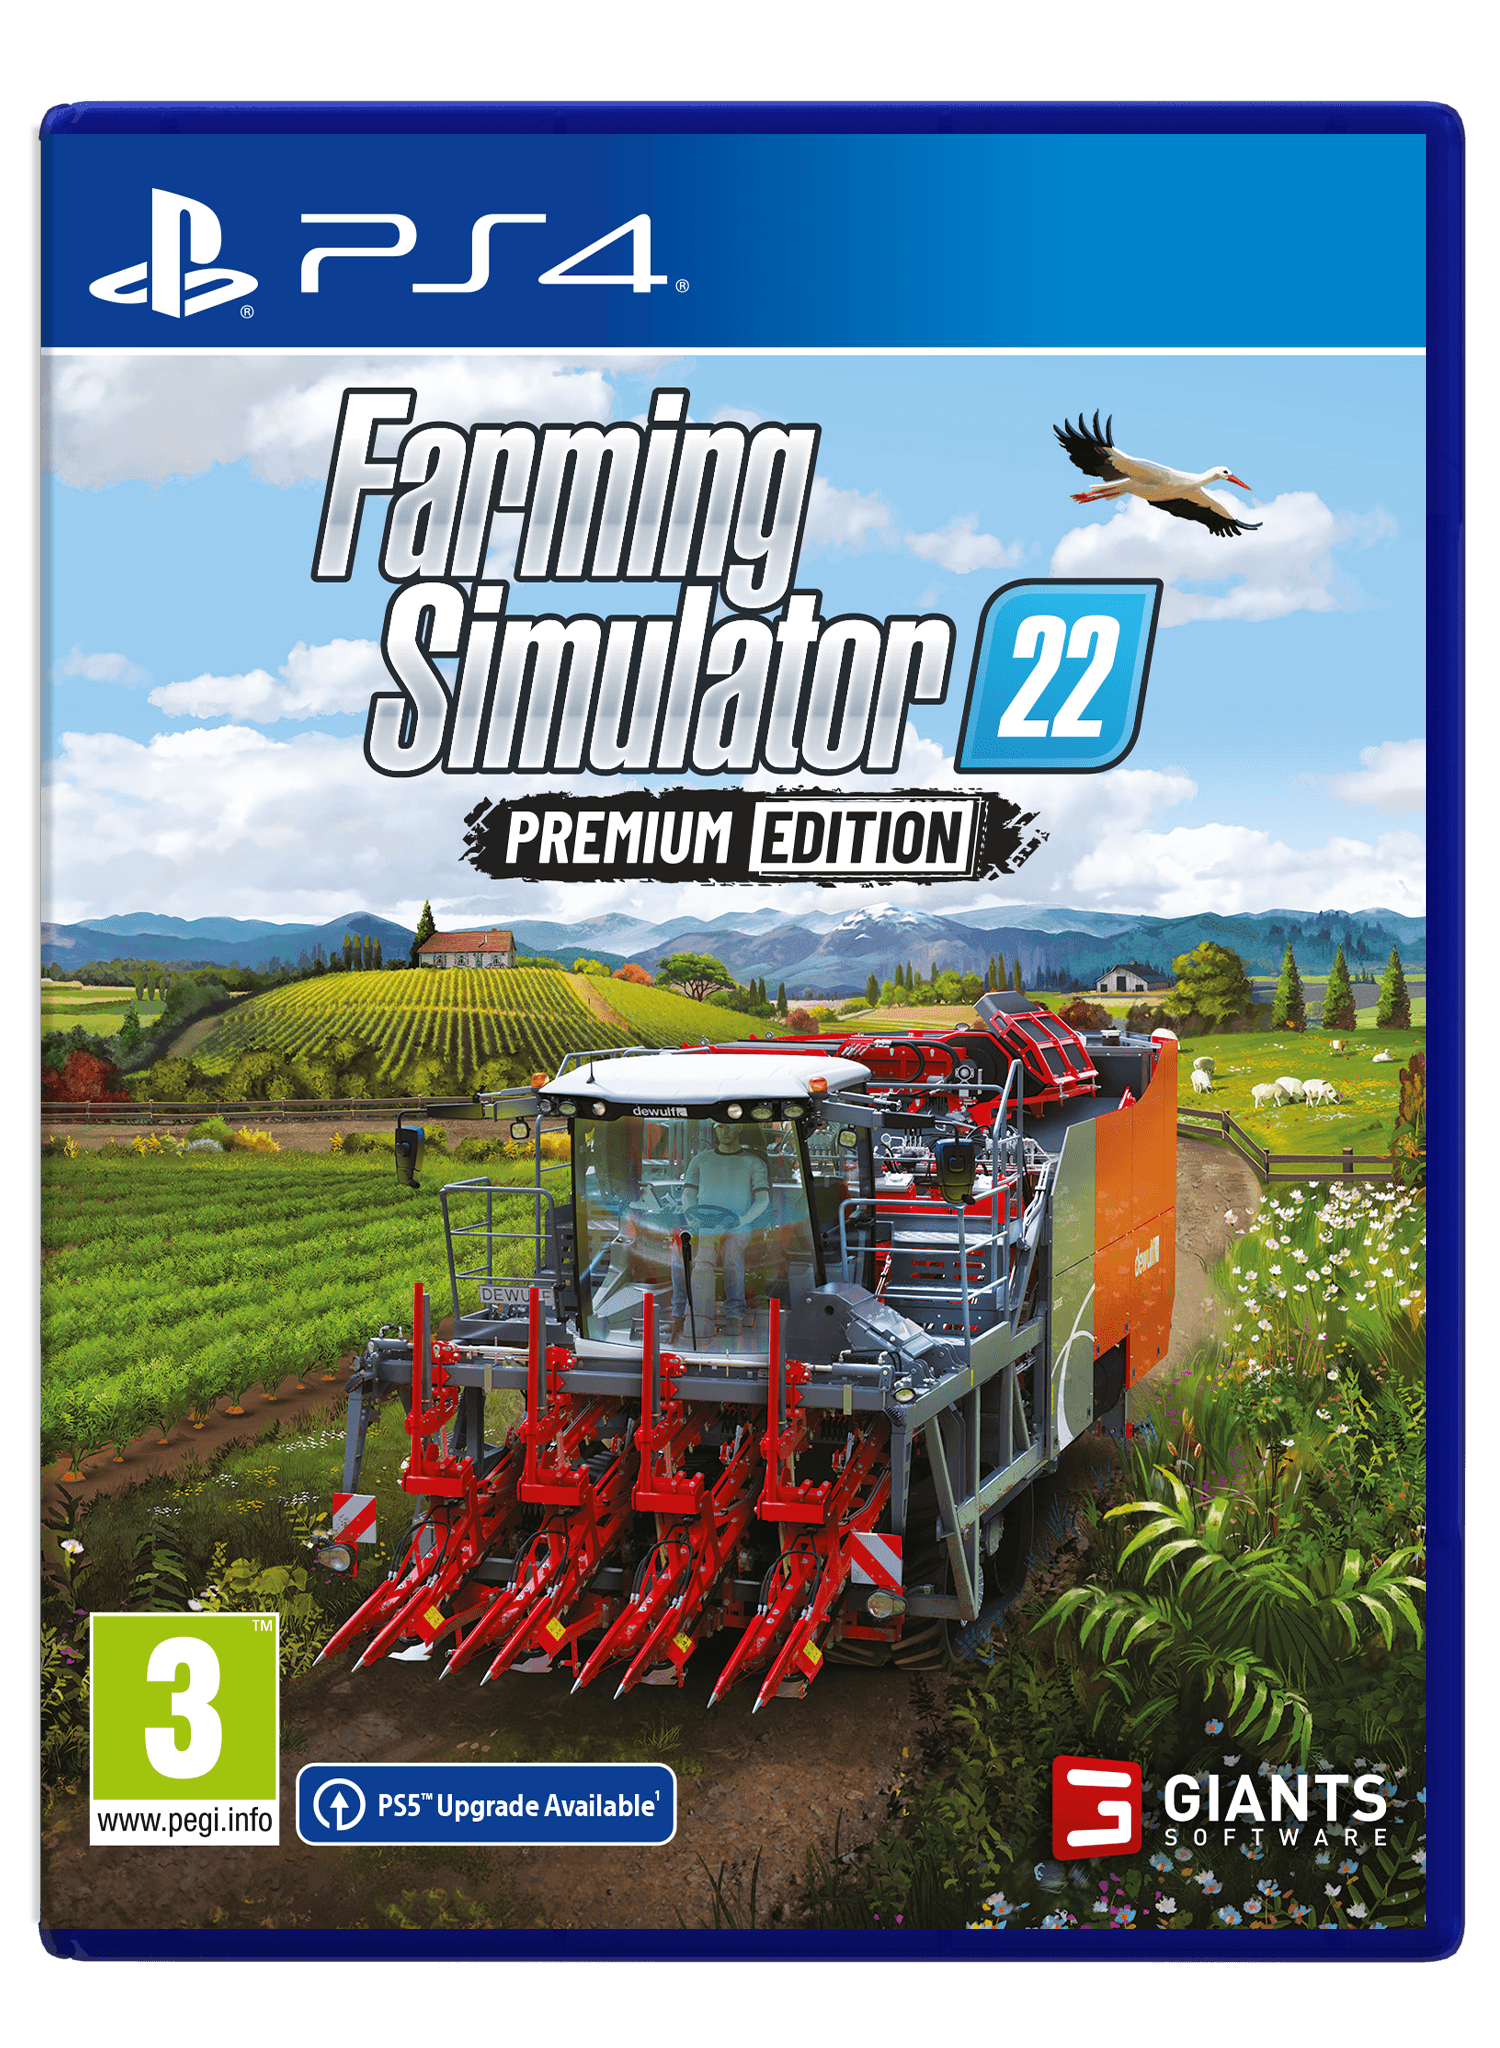 Playstation 4 - Farming Simulator 22 Premium Edition - Want a New Gadget